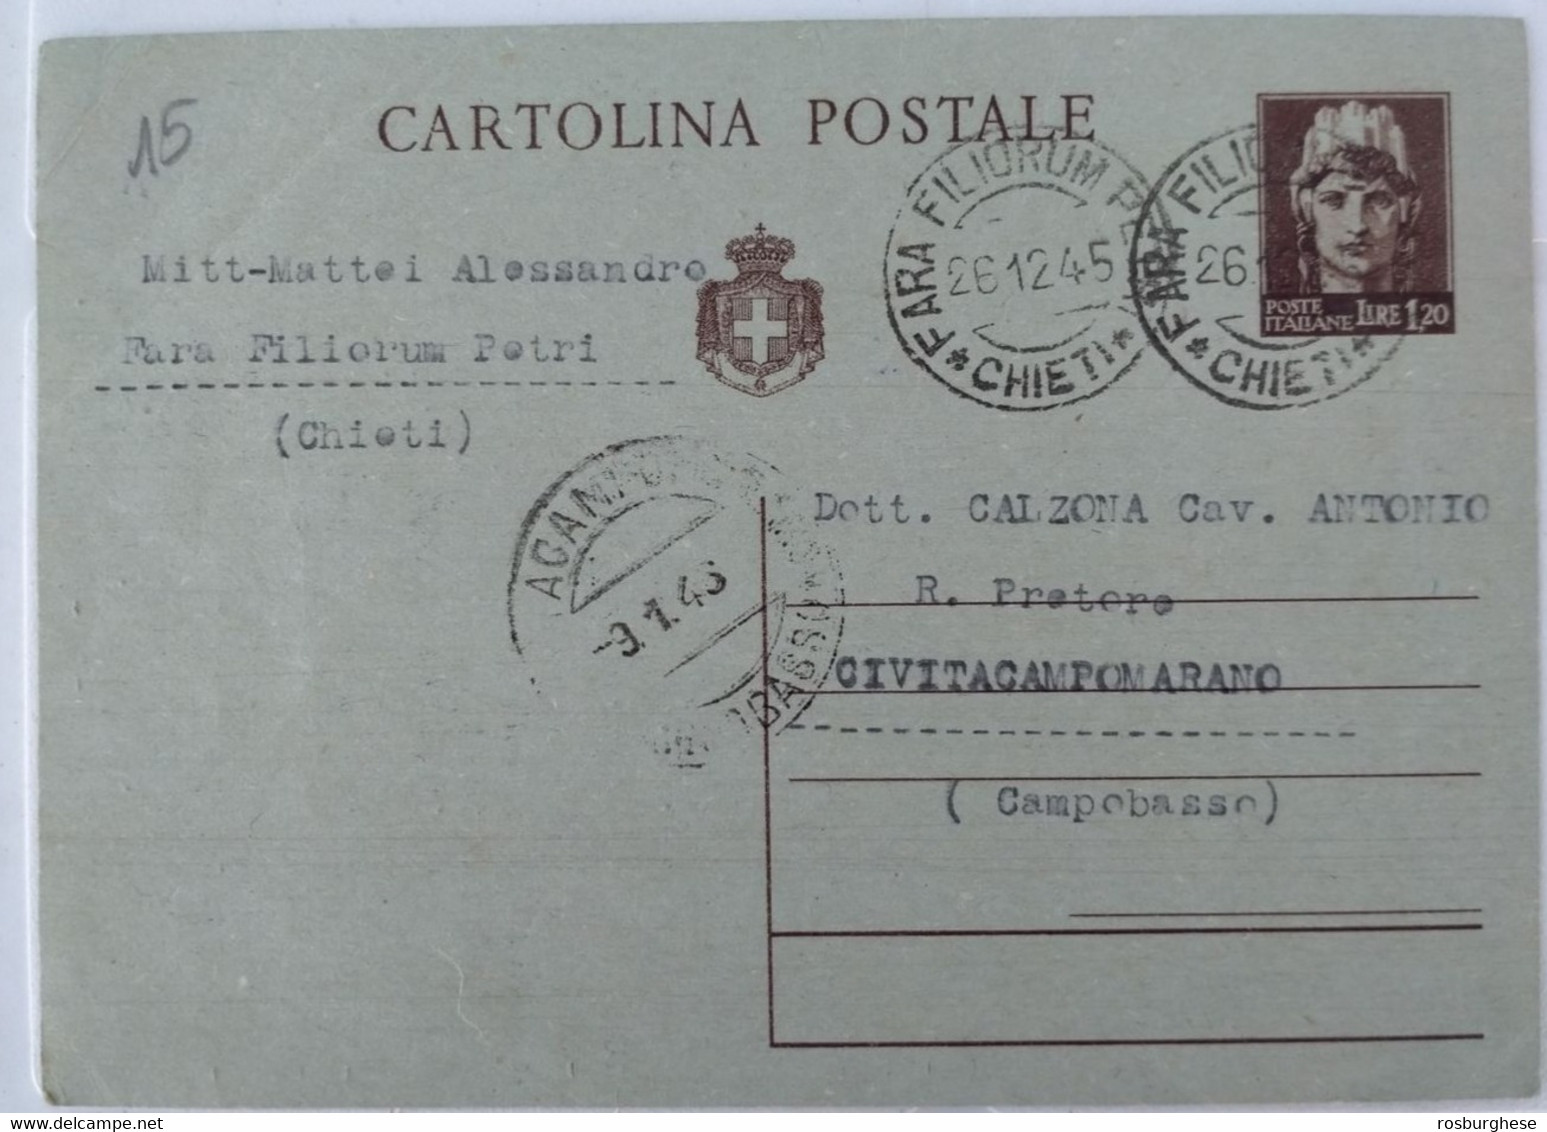 Cartolina Postale 1,20 Centesimi Annullo Fara Filiorum Petri Chieti Civitacampomarano VG 1945 - Stamped Stationery